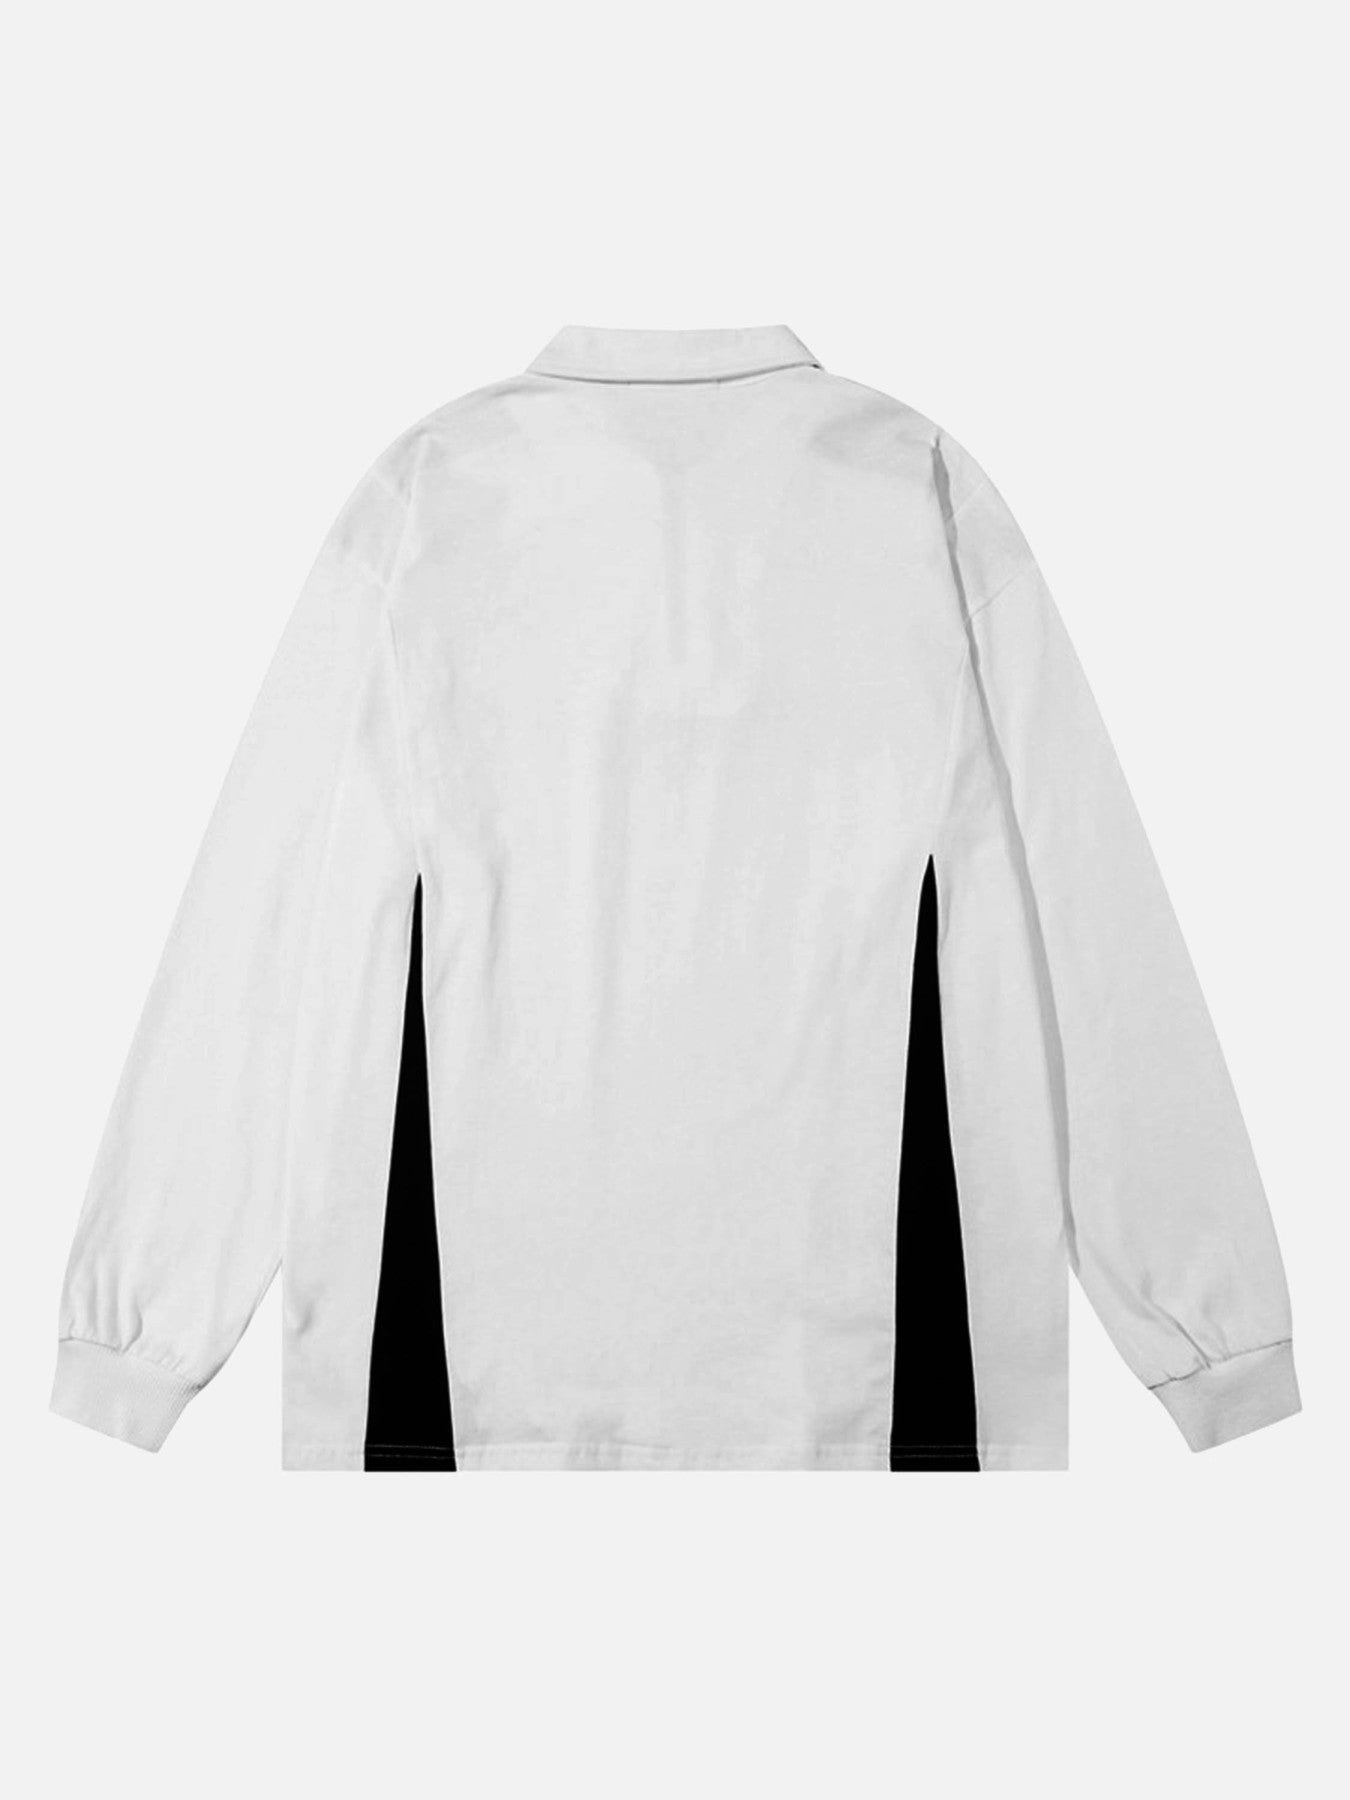 Thesupermade High Street Racing Suit Long Sleeve Polo Shirt